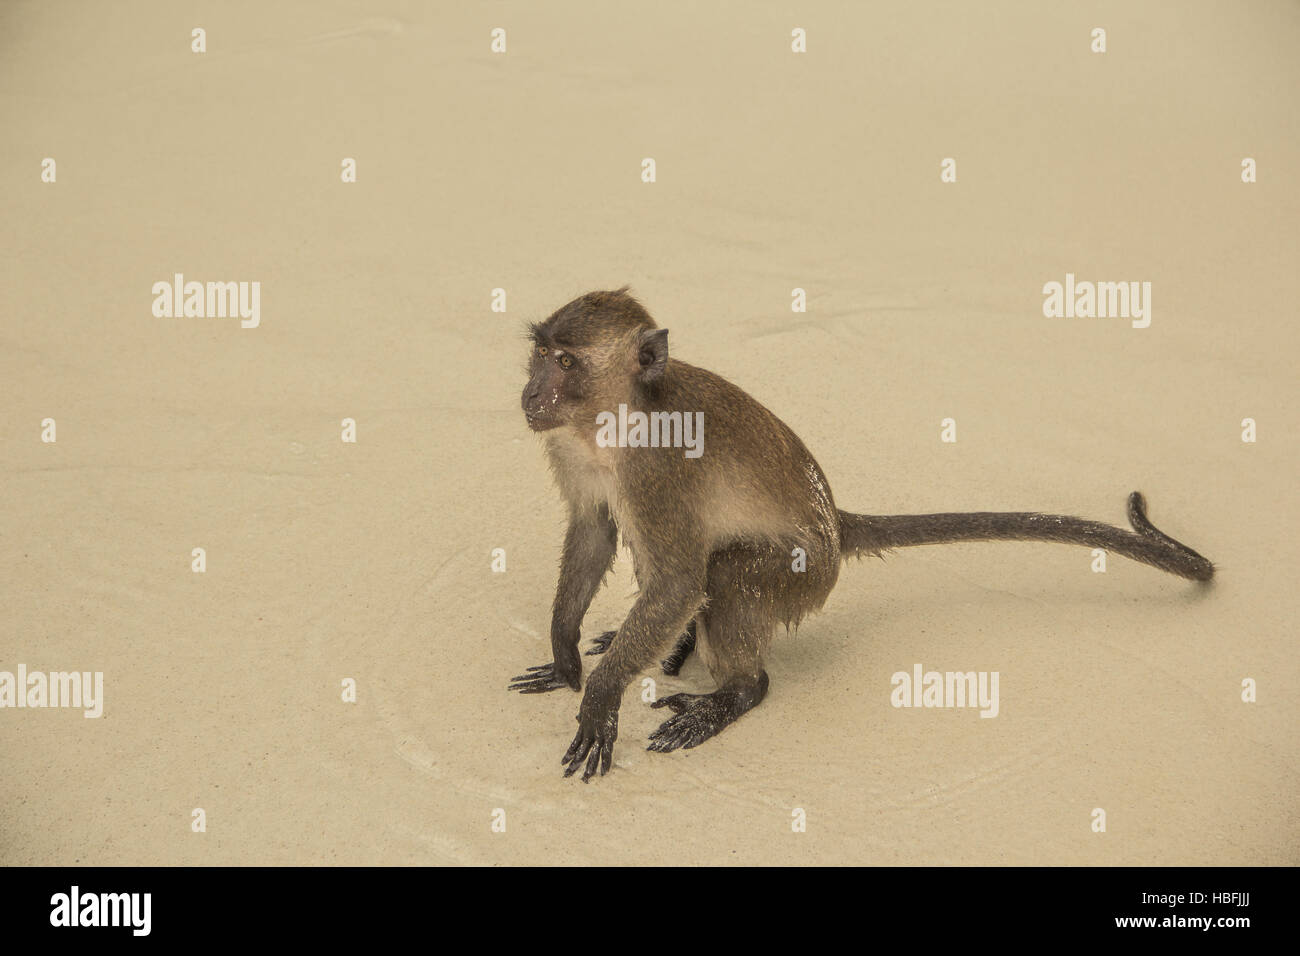 monkey on the beach in asia Stock Photo